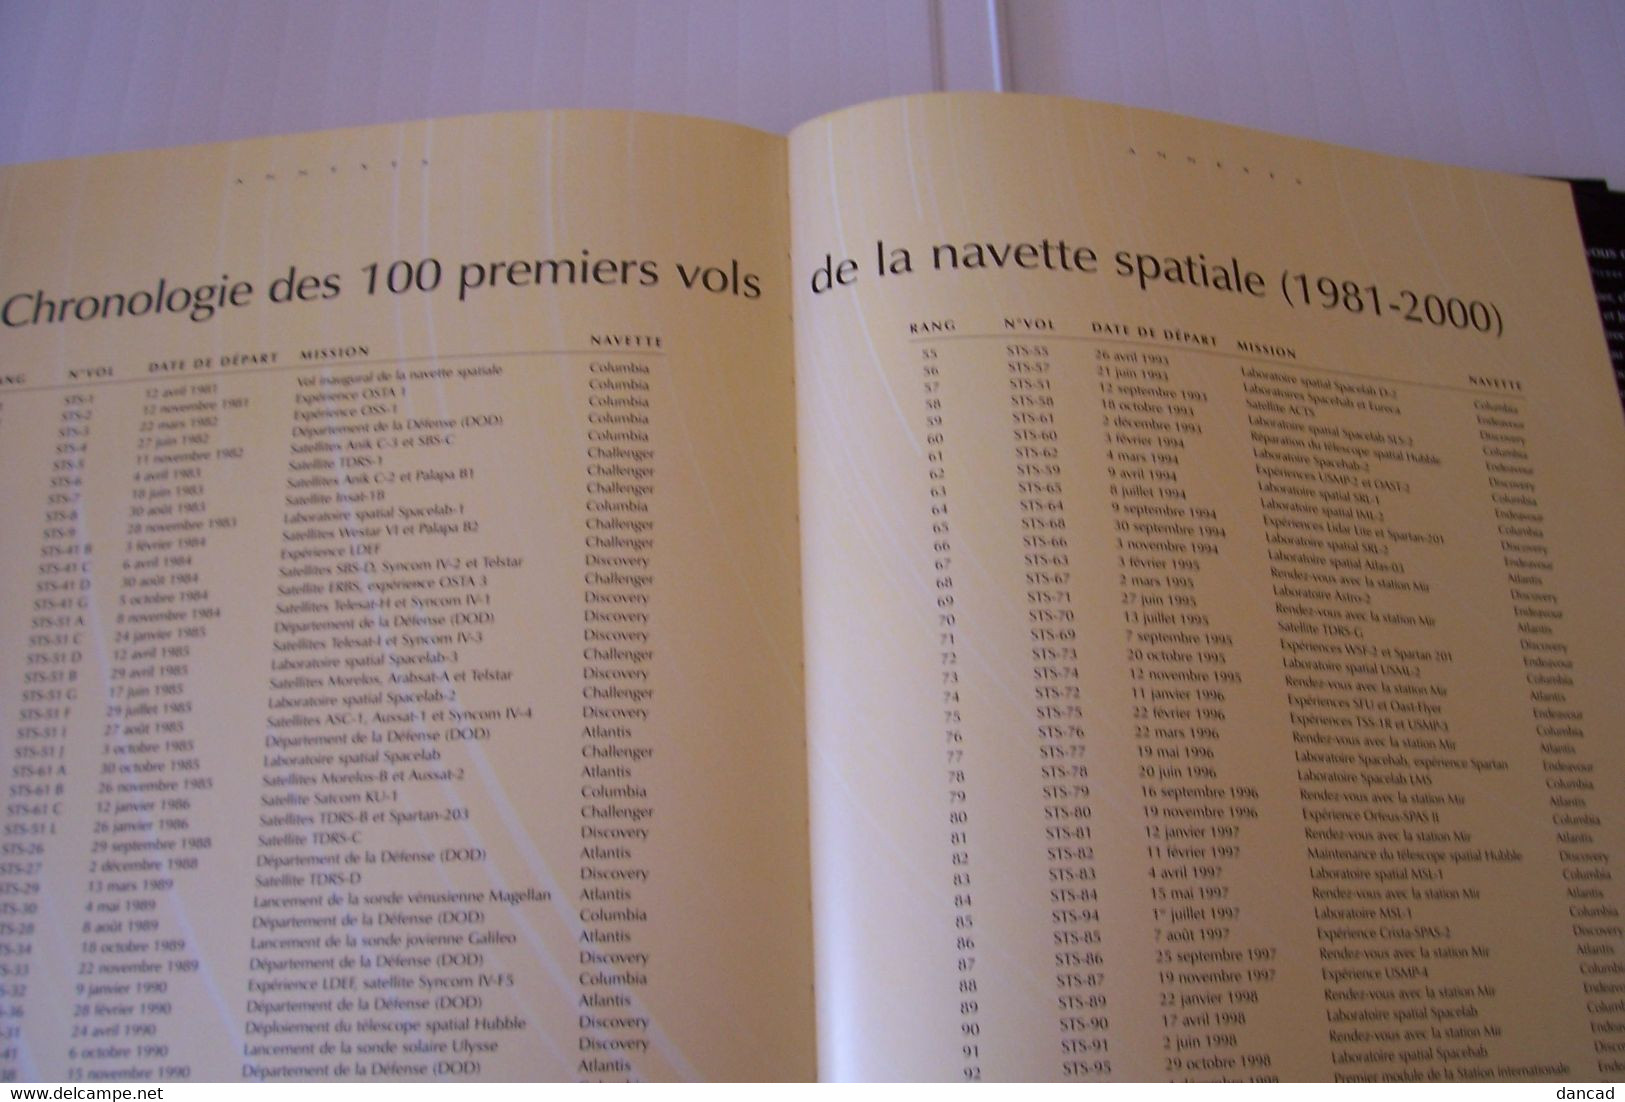 UNE ODYSSEE DE L'ESPACE  -1961-2001  - Serge Brunier -  ( Bordas 2000 ) - ESPACE - AVIATION -